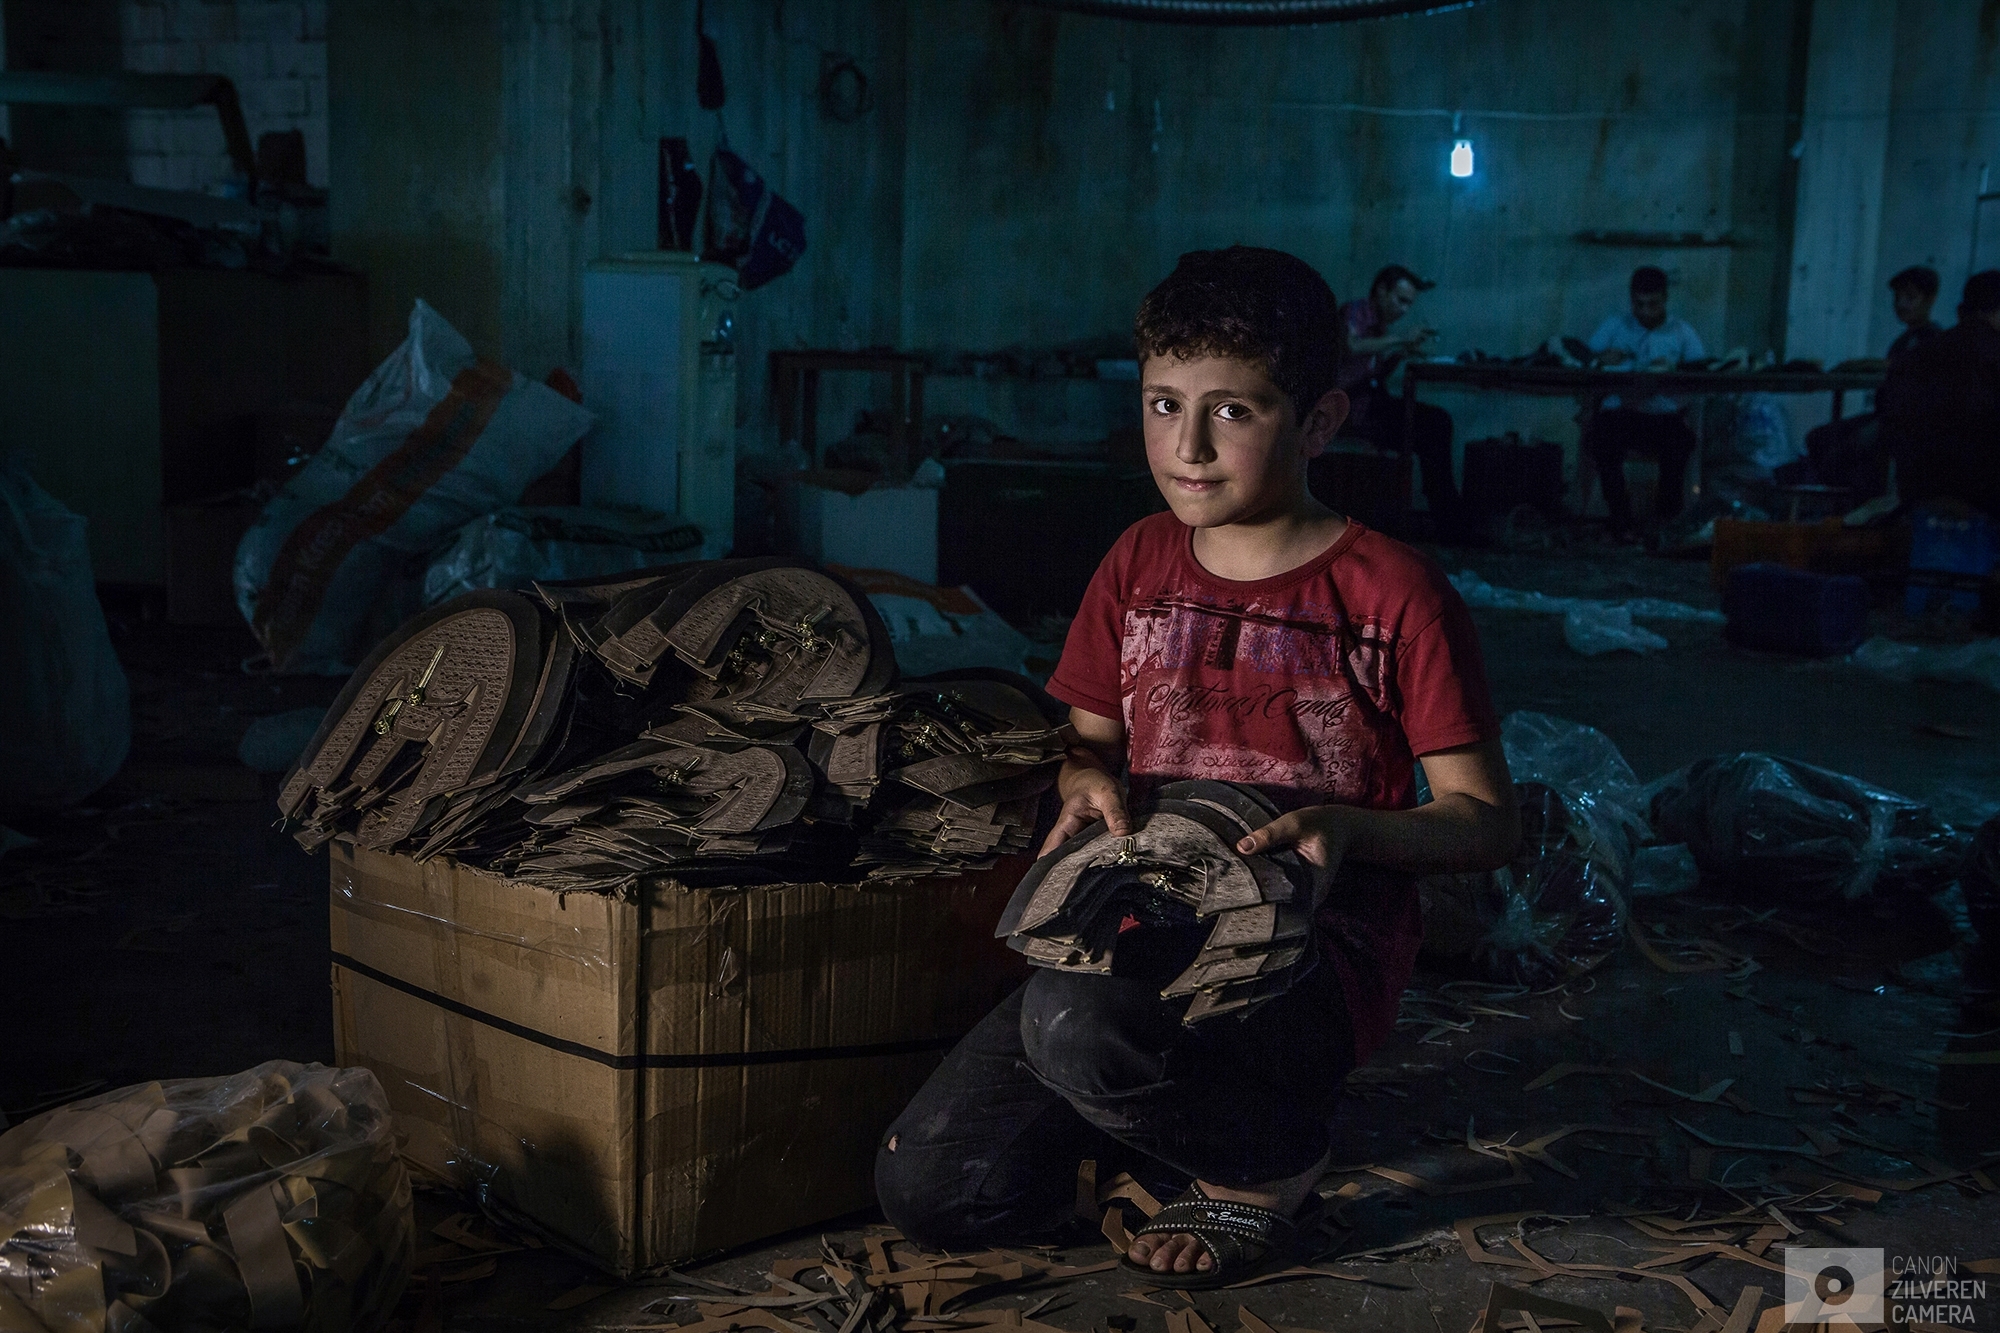 Syrian child labor